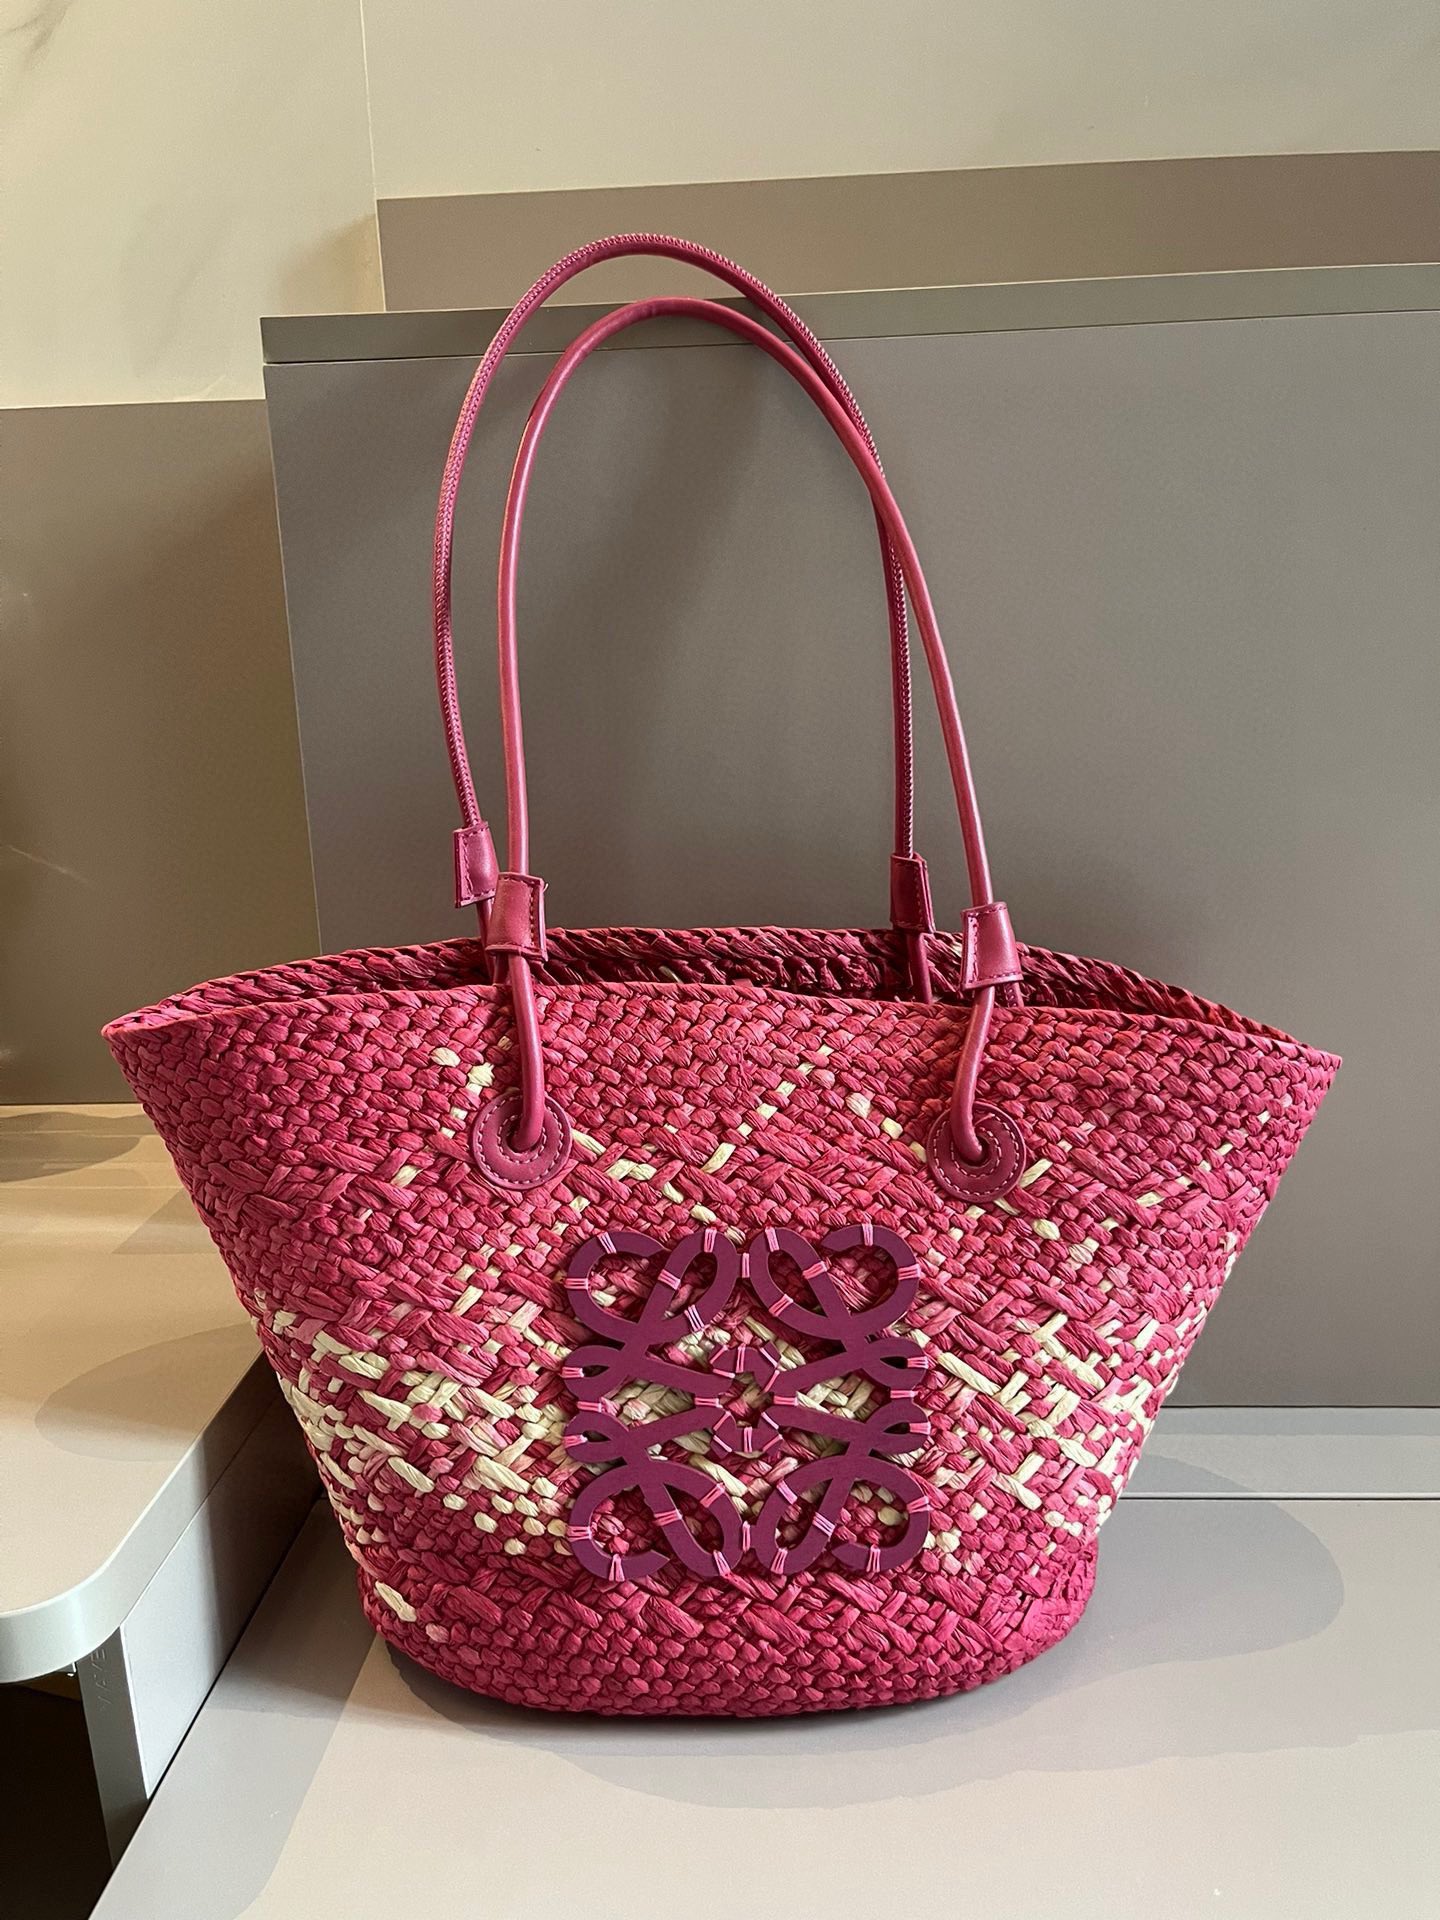 Loewe Luxury
 Bags Handbags Buy Best High-Quality
 Raffia Straw Woven Summer Collection Beach